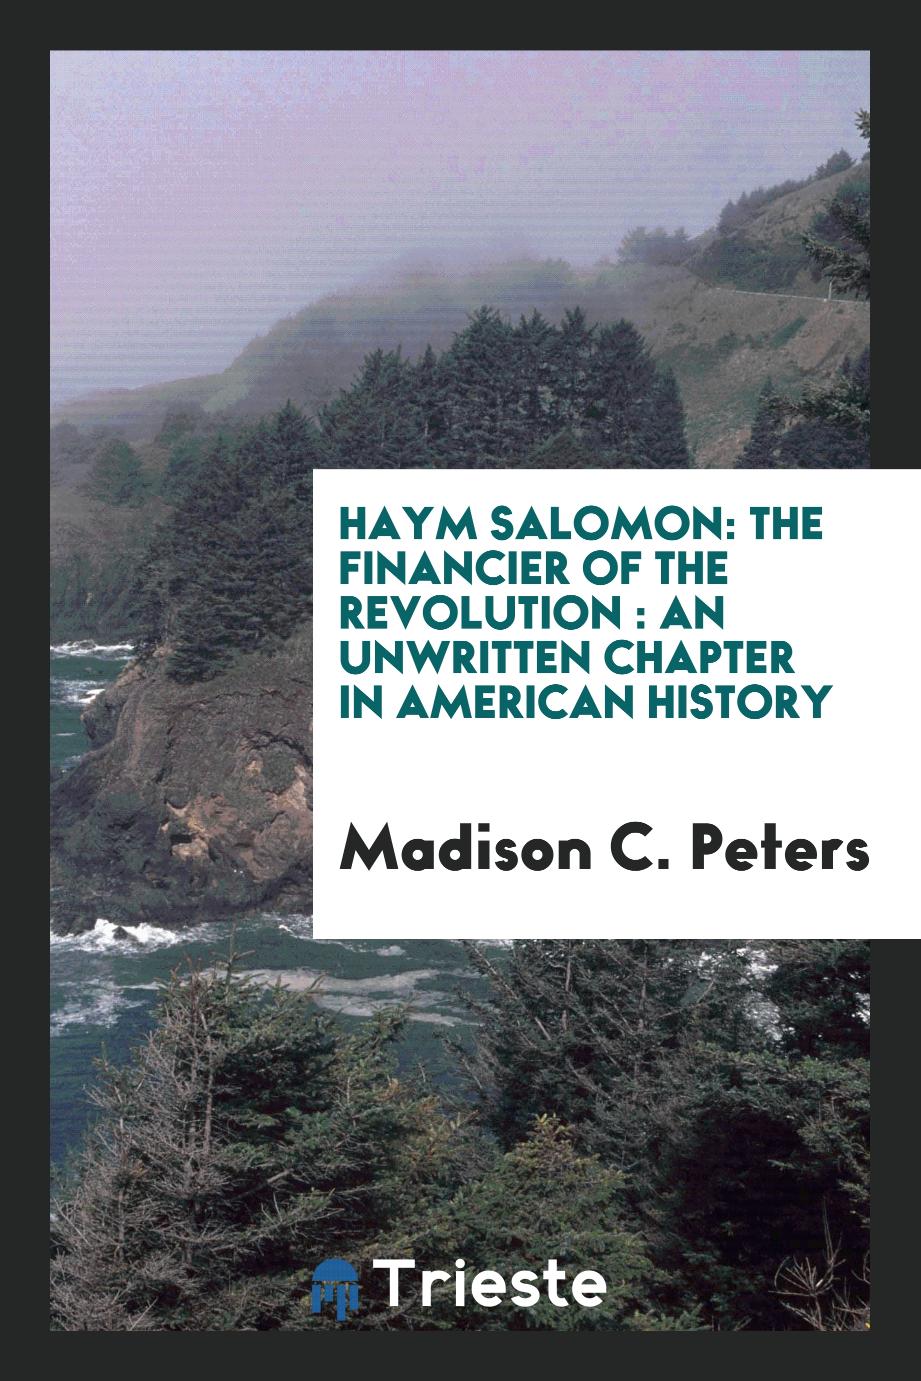 Haym Salomon: The Financier of the Revolution : an Unwritten Chapter in American History